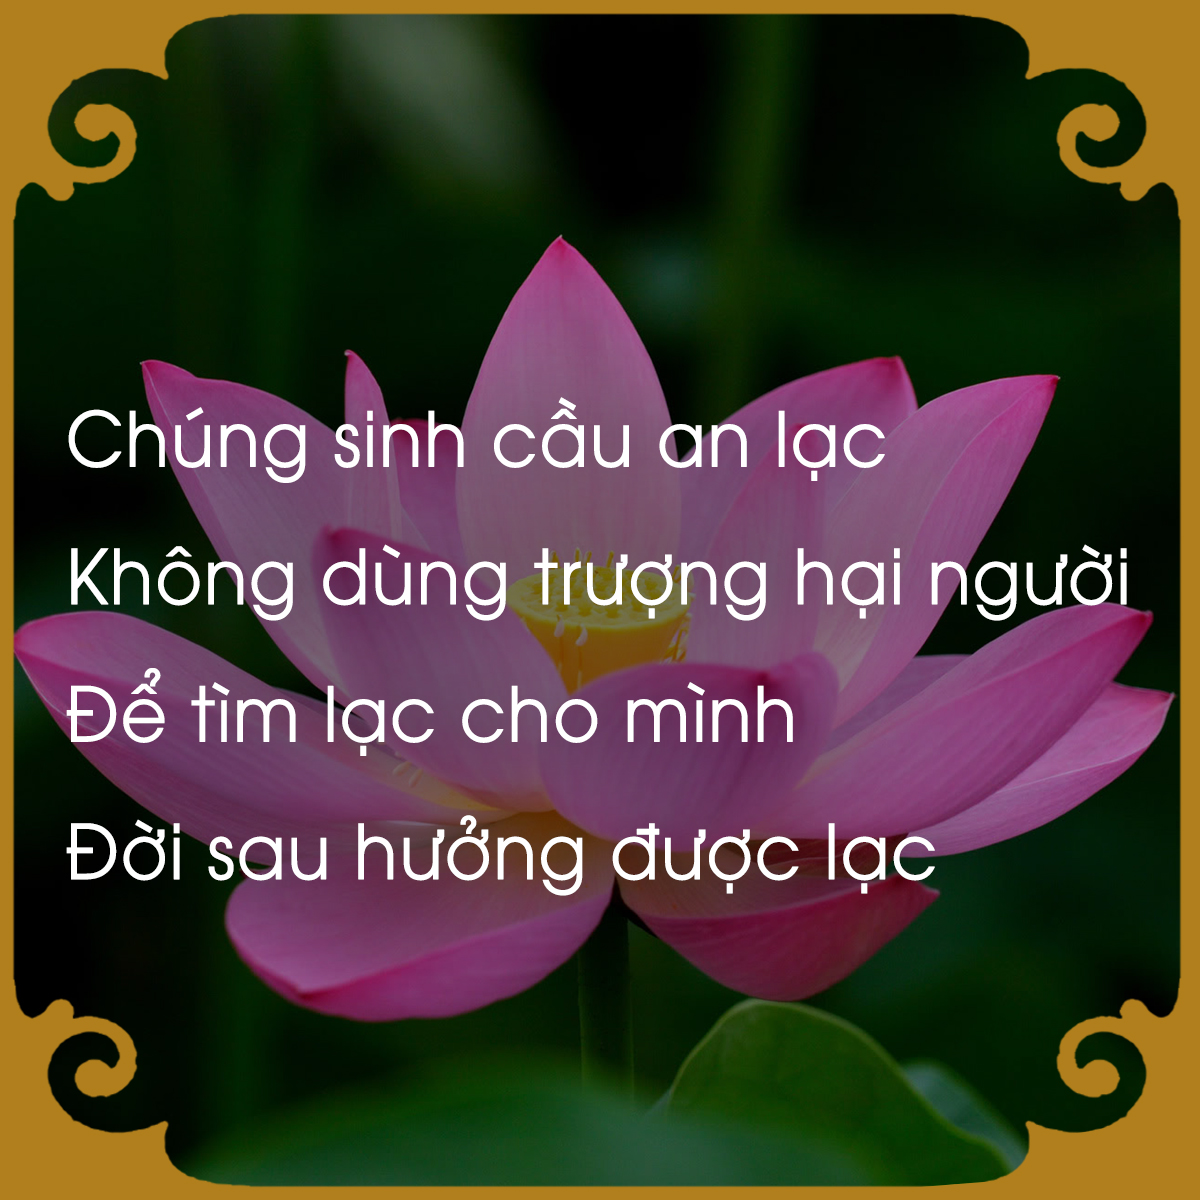 chiem-nghiem-luat-nhan-qua-qua-loi-phat-day-giadinhonline.vn 2